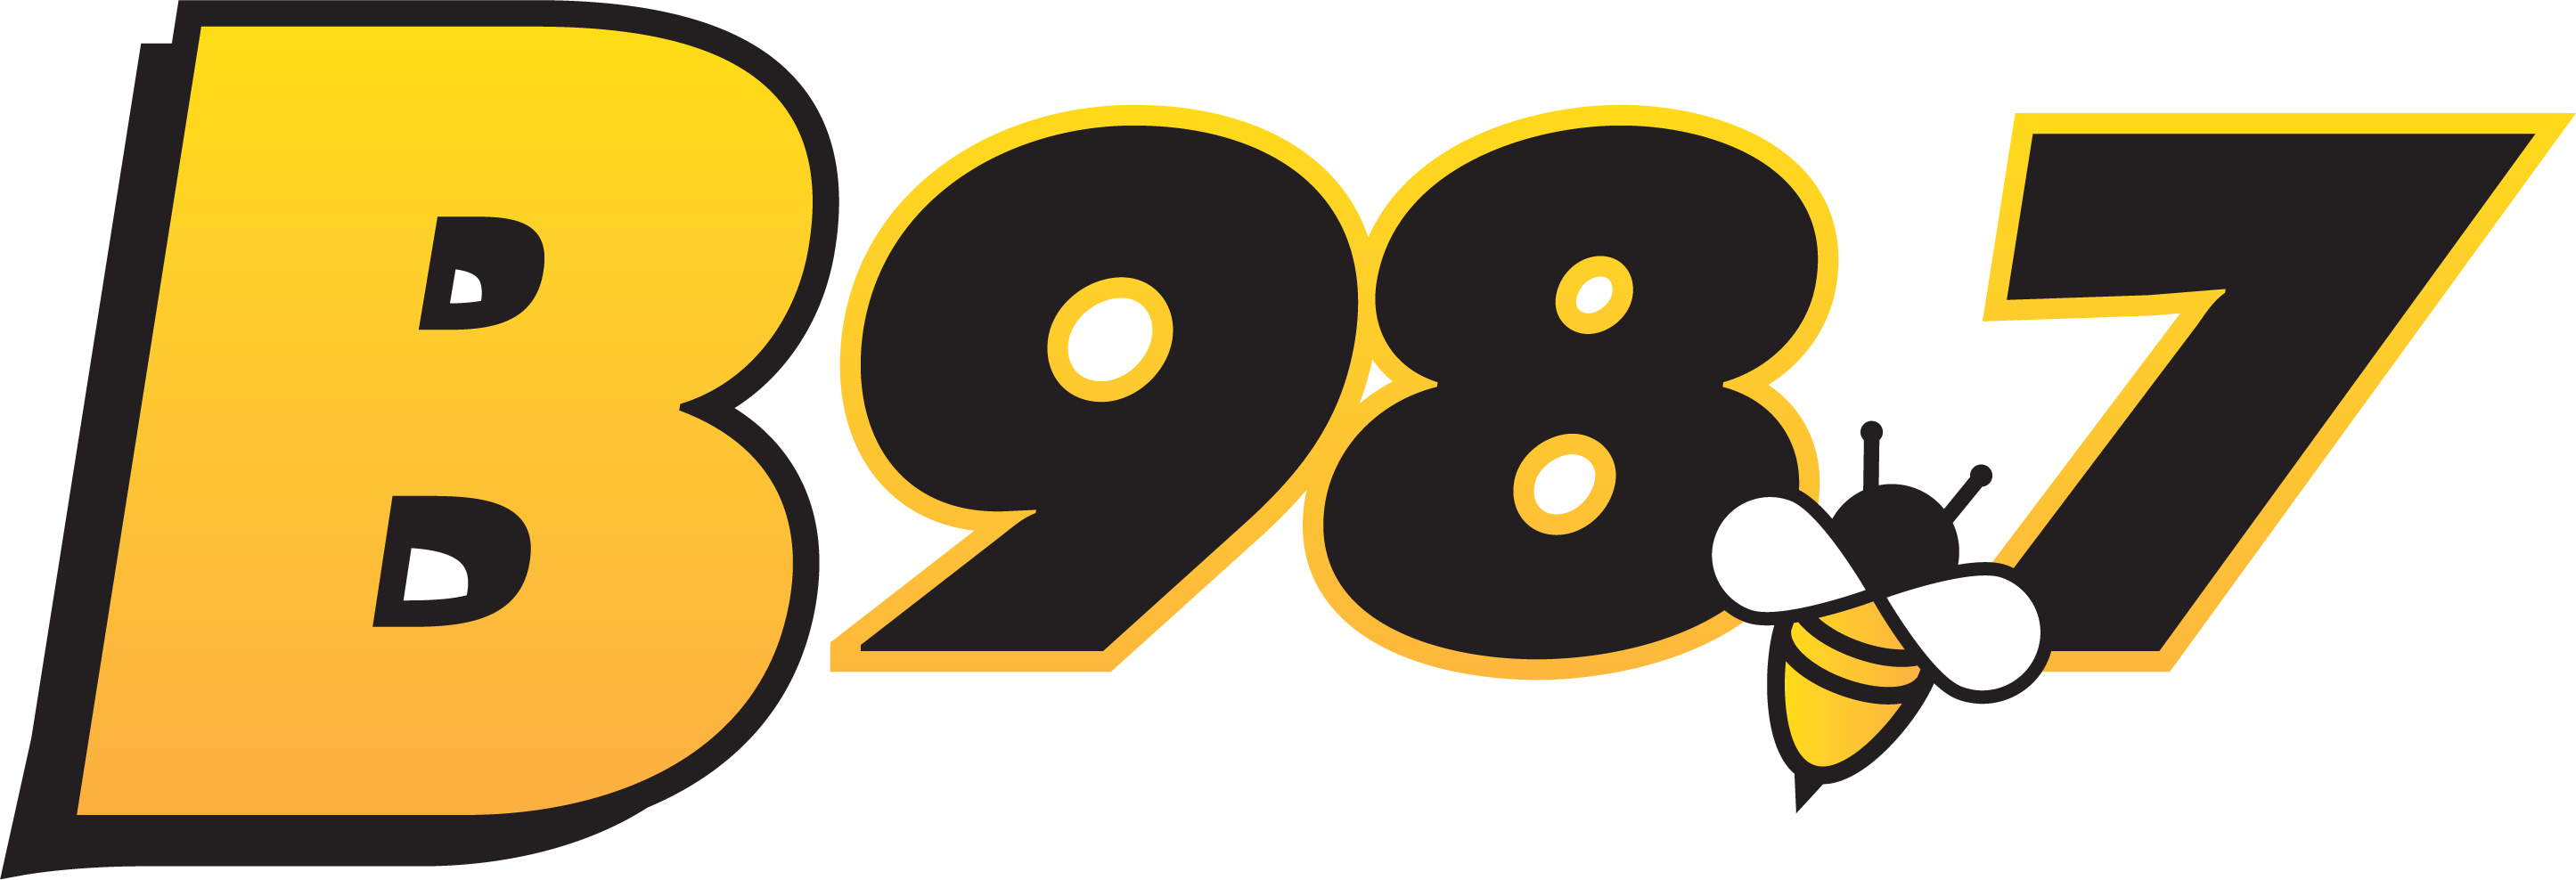 B 98.7 logo